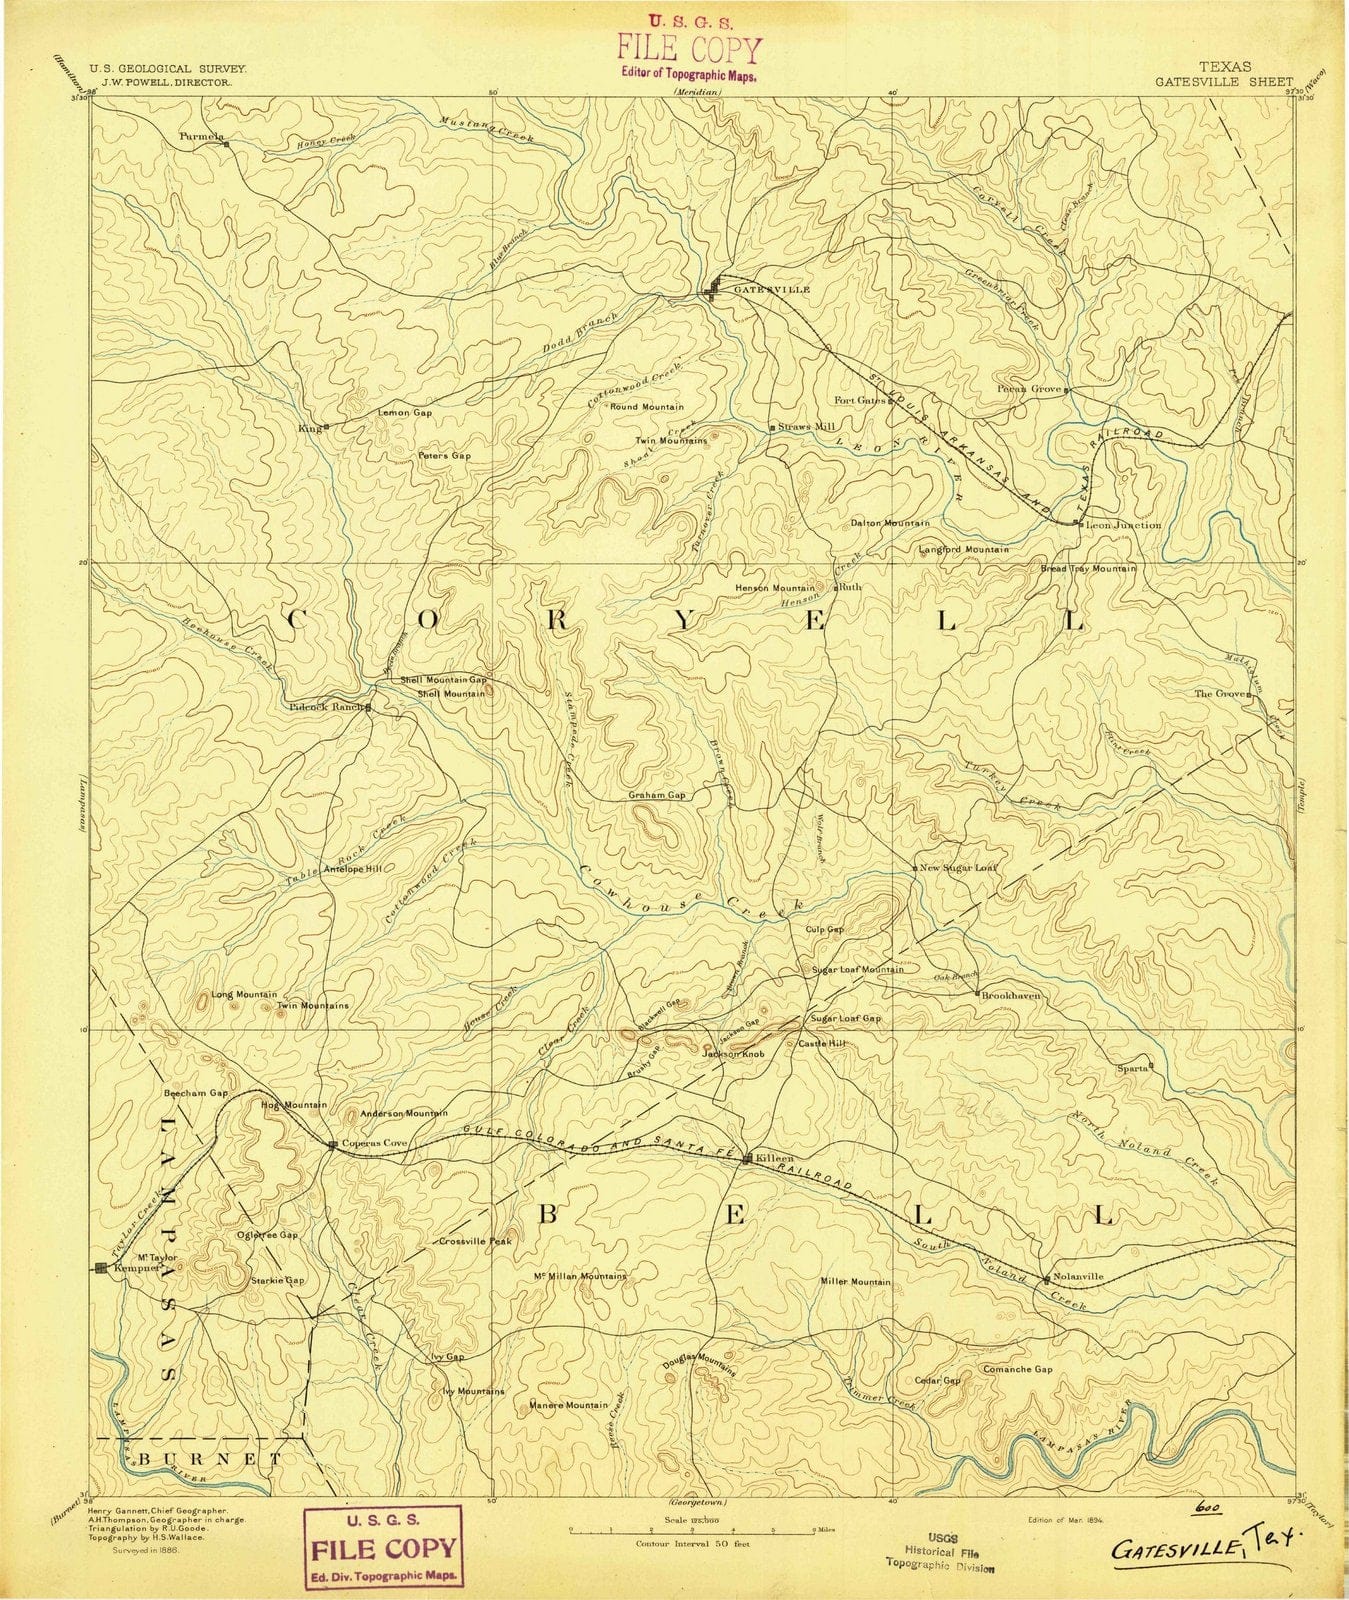 1894 Gatesville, TX - Texas - USGS Topographic Map